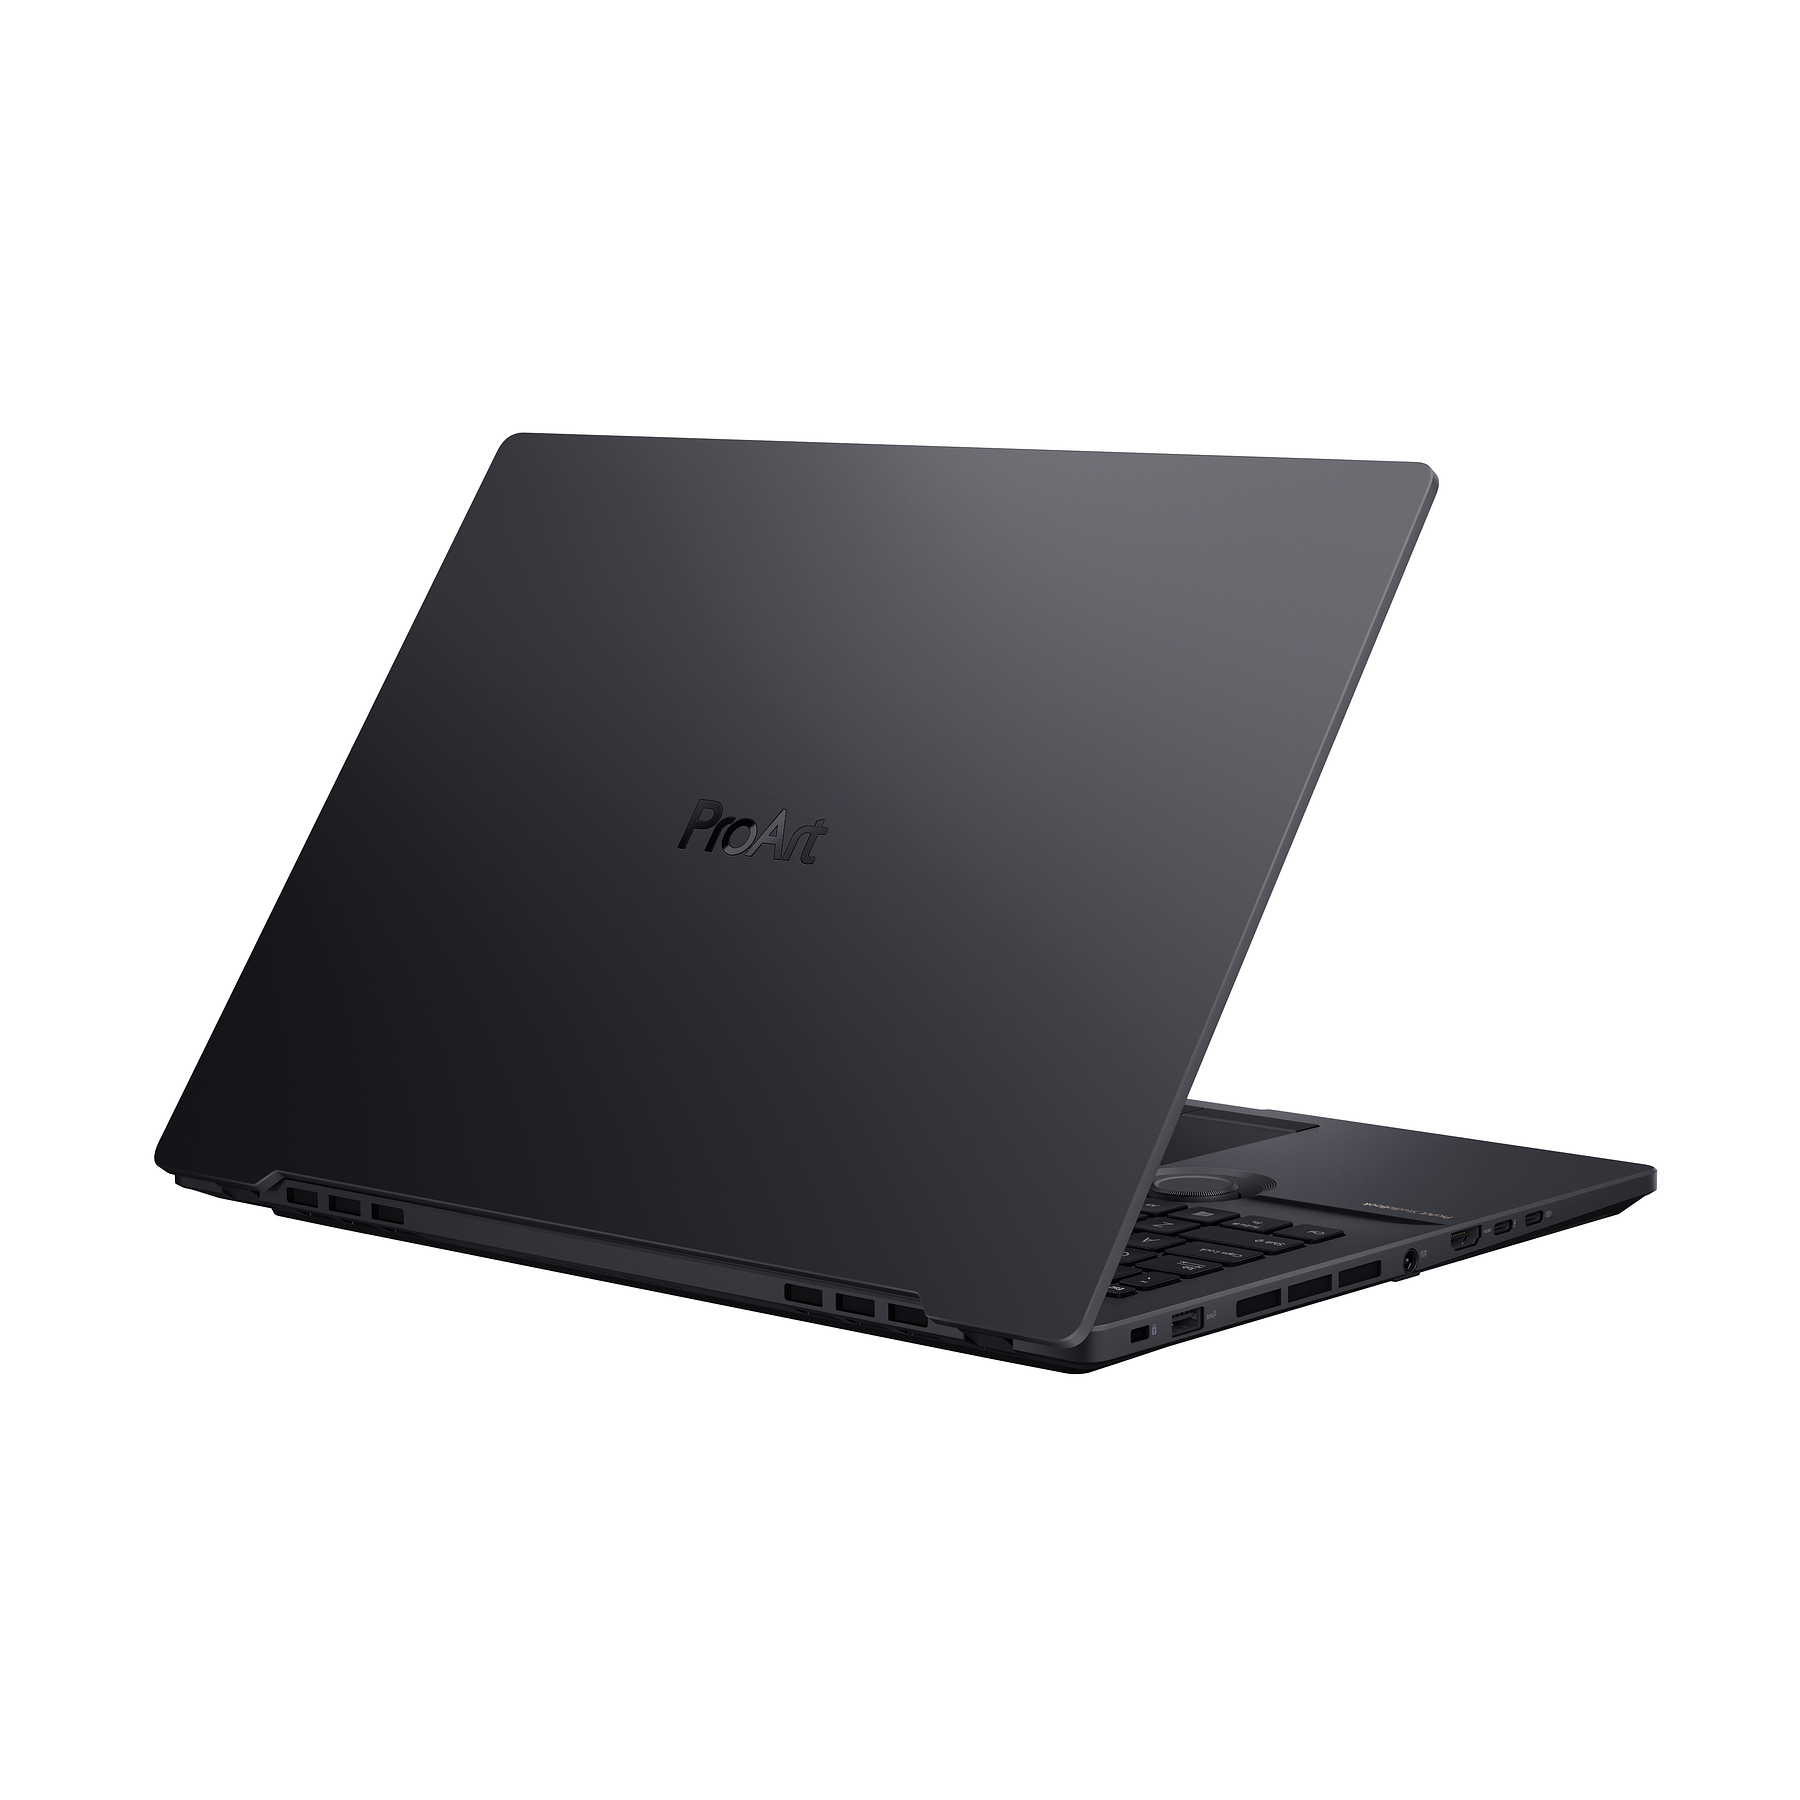 Asus ProArt StudioBook Pro Notebook 16 Pulgadas Intel Core i7 32 GB